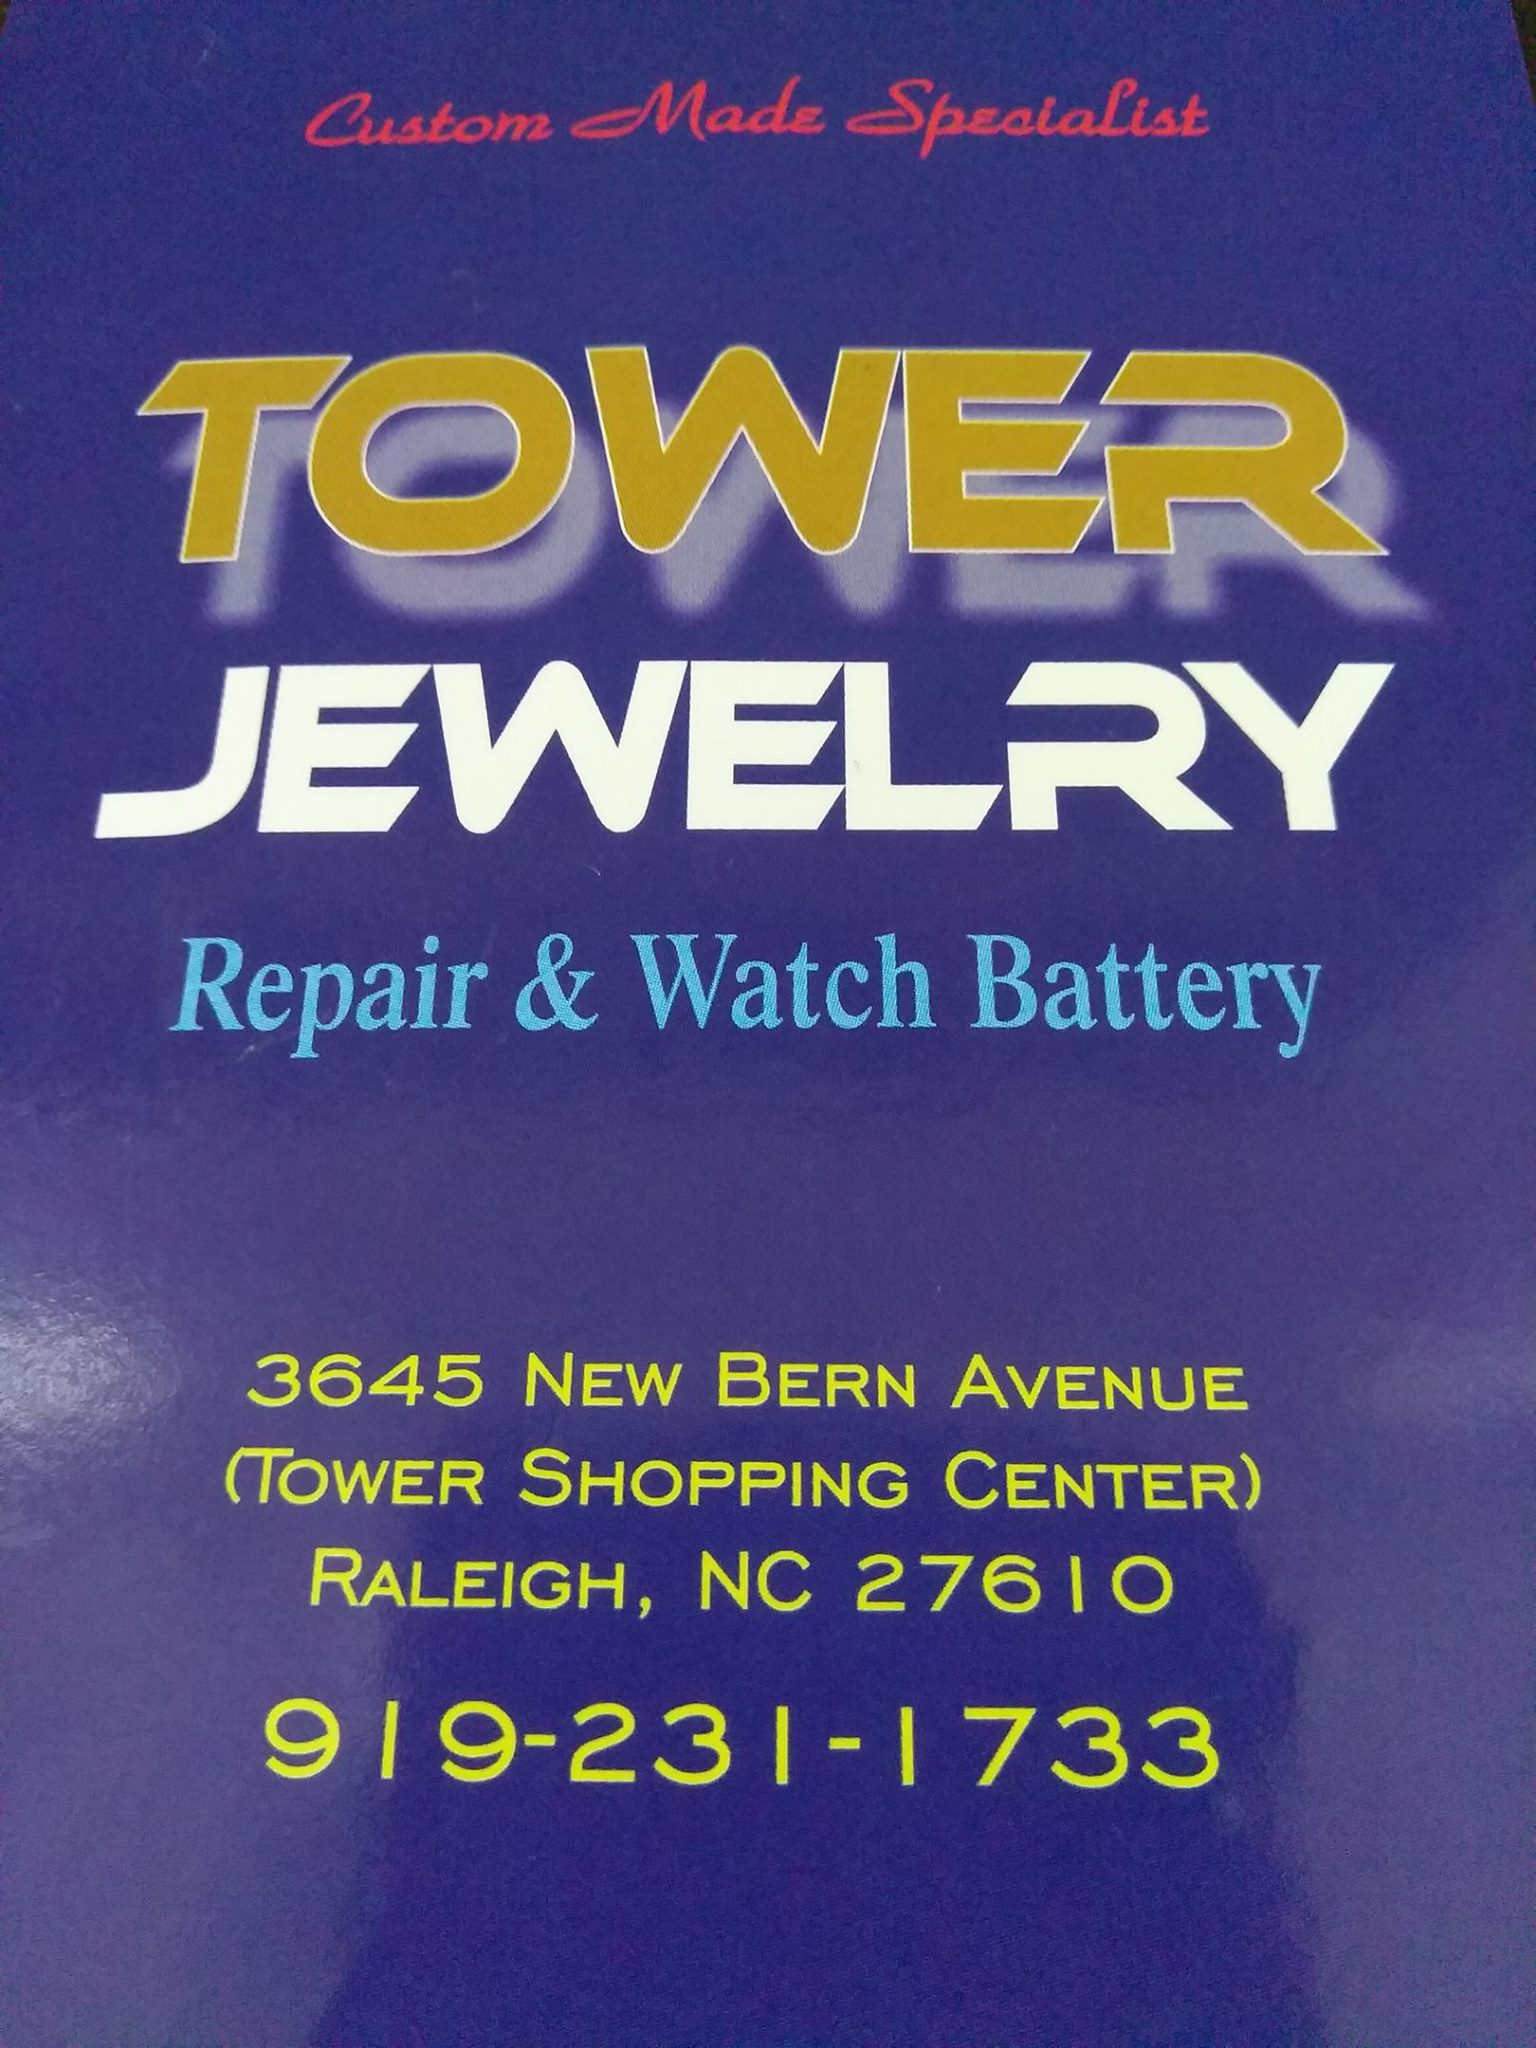 Tower Jewelry